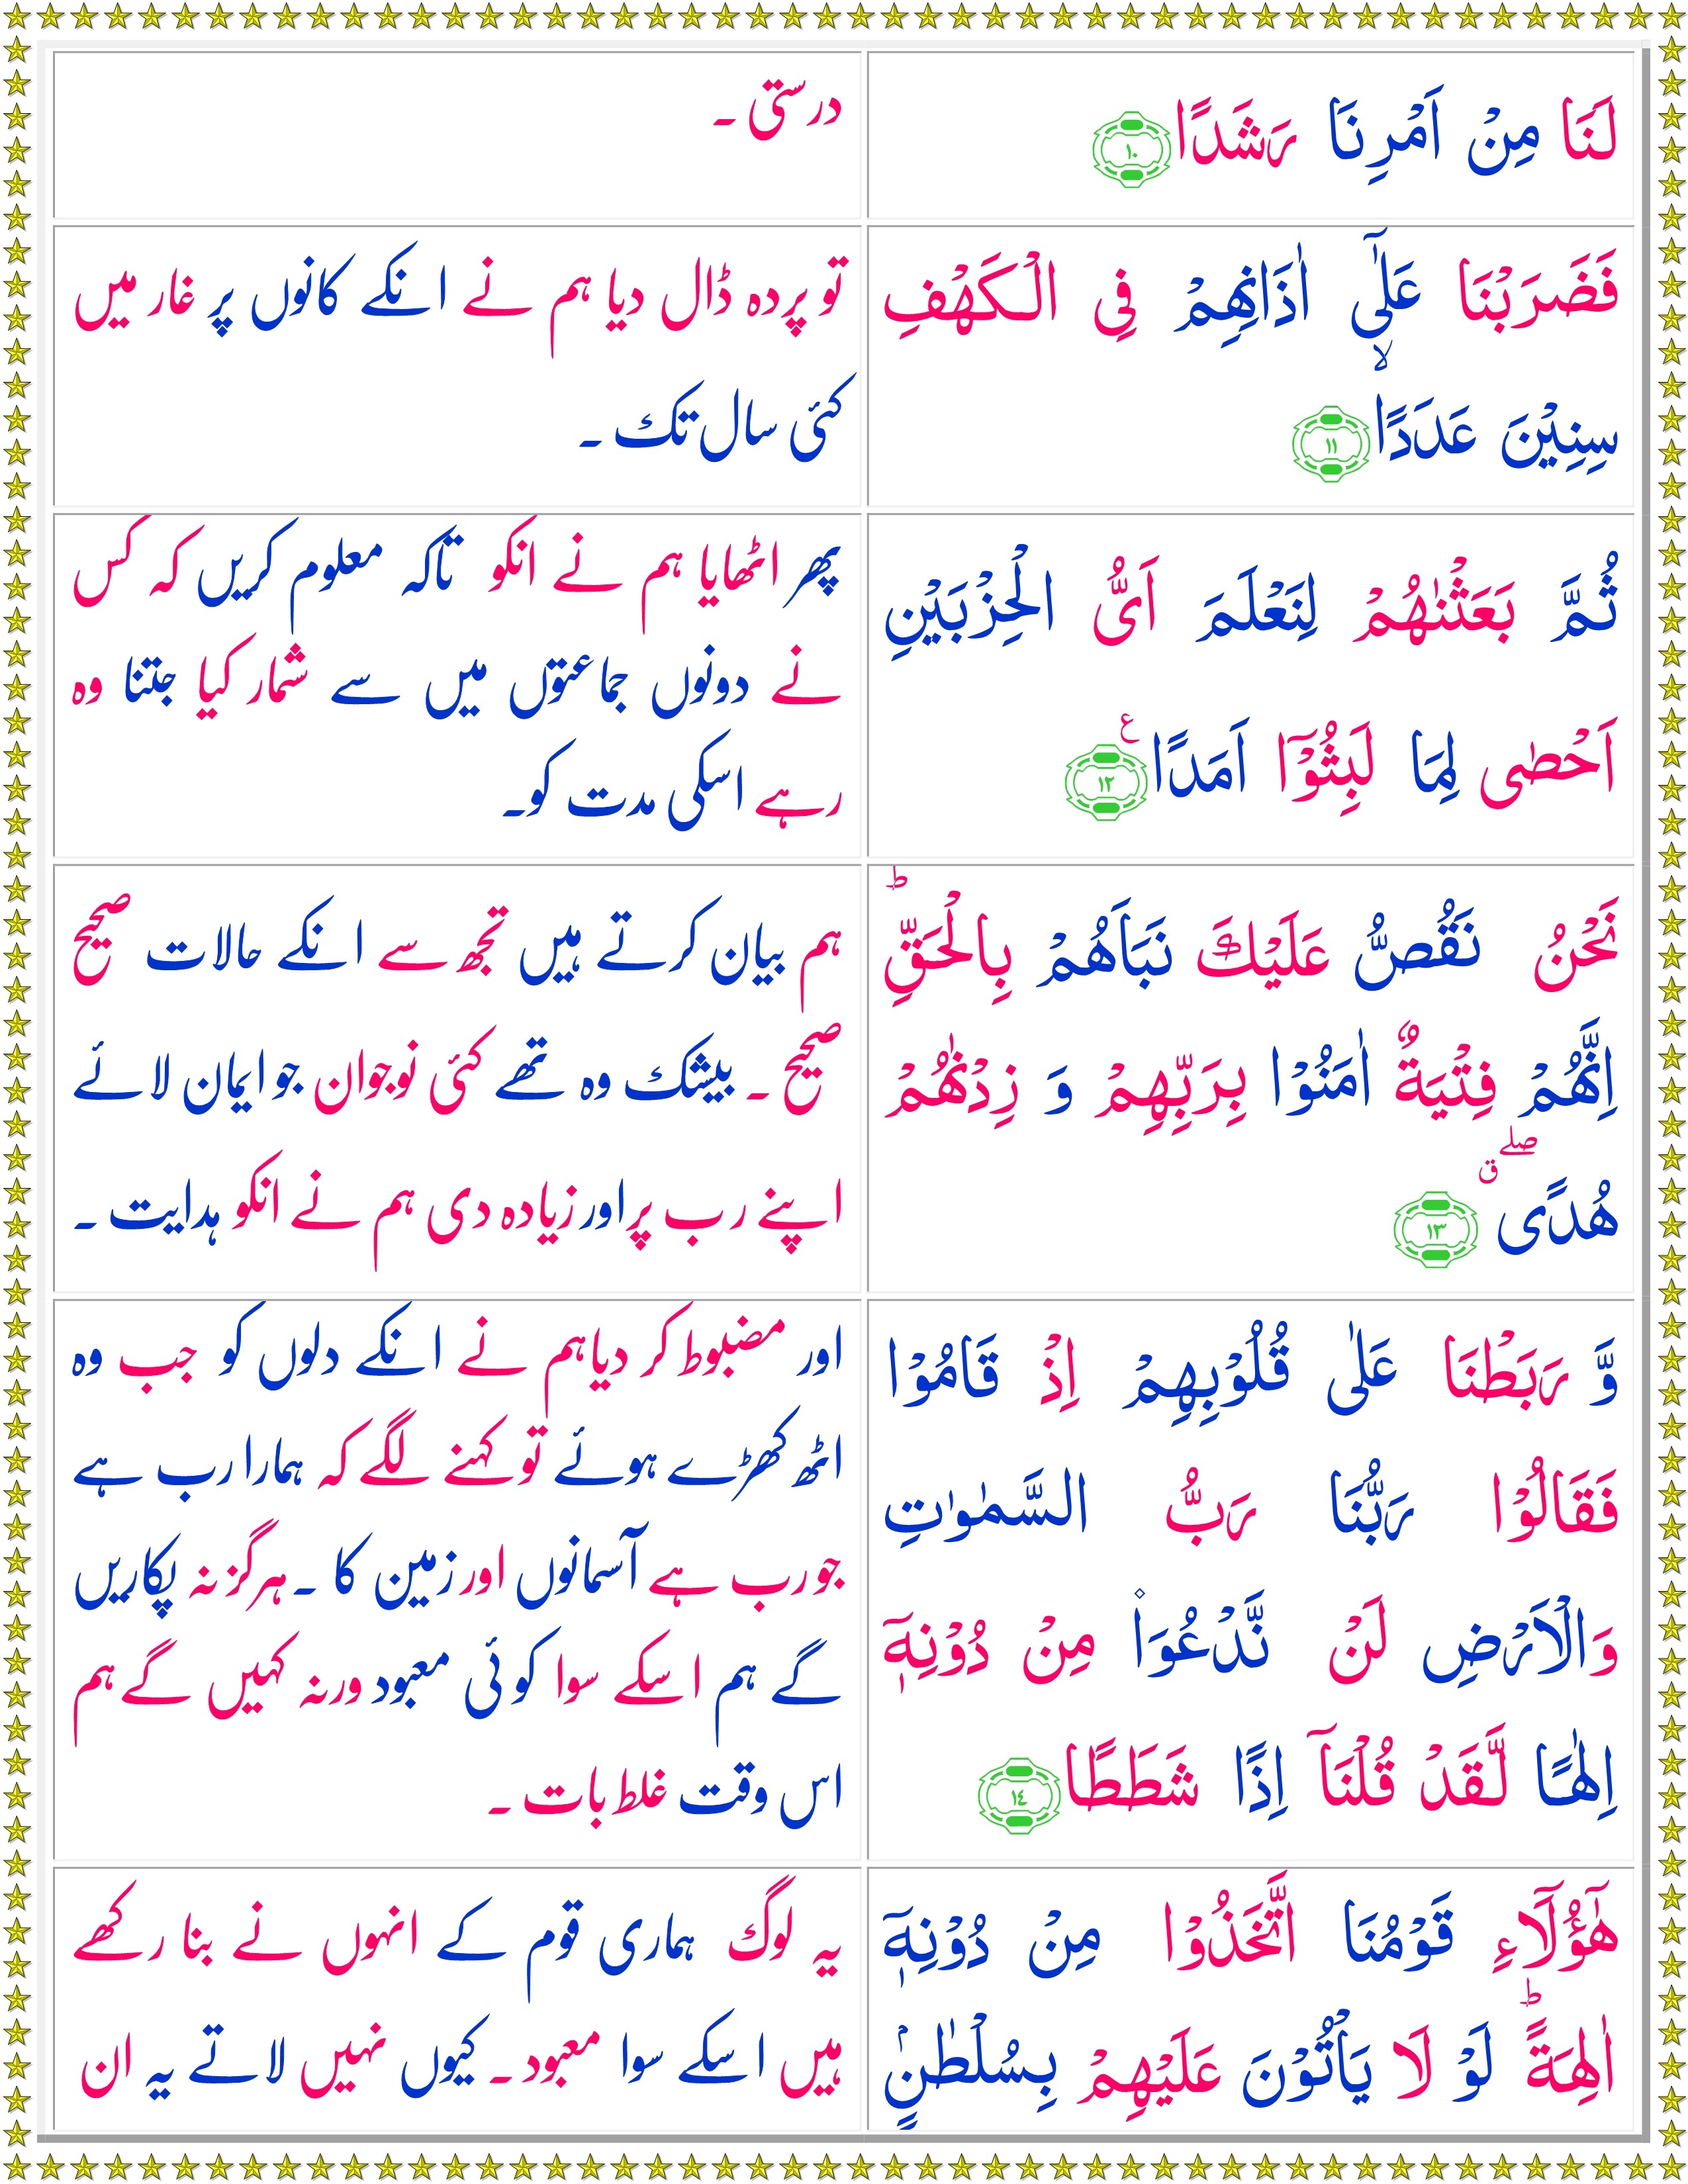 Lihat Surah Al Kahfi Ayat 15 Urdu Translation - AbdulRaafi Murottal Quran